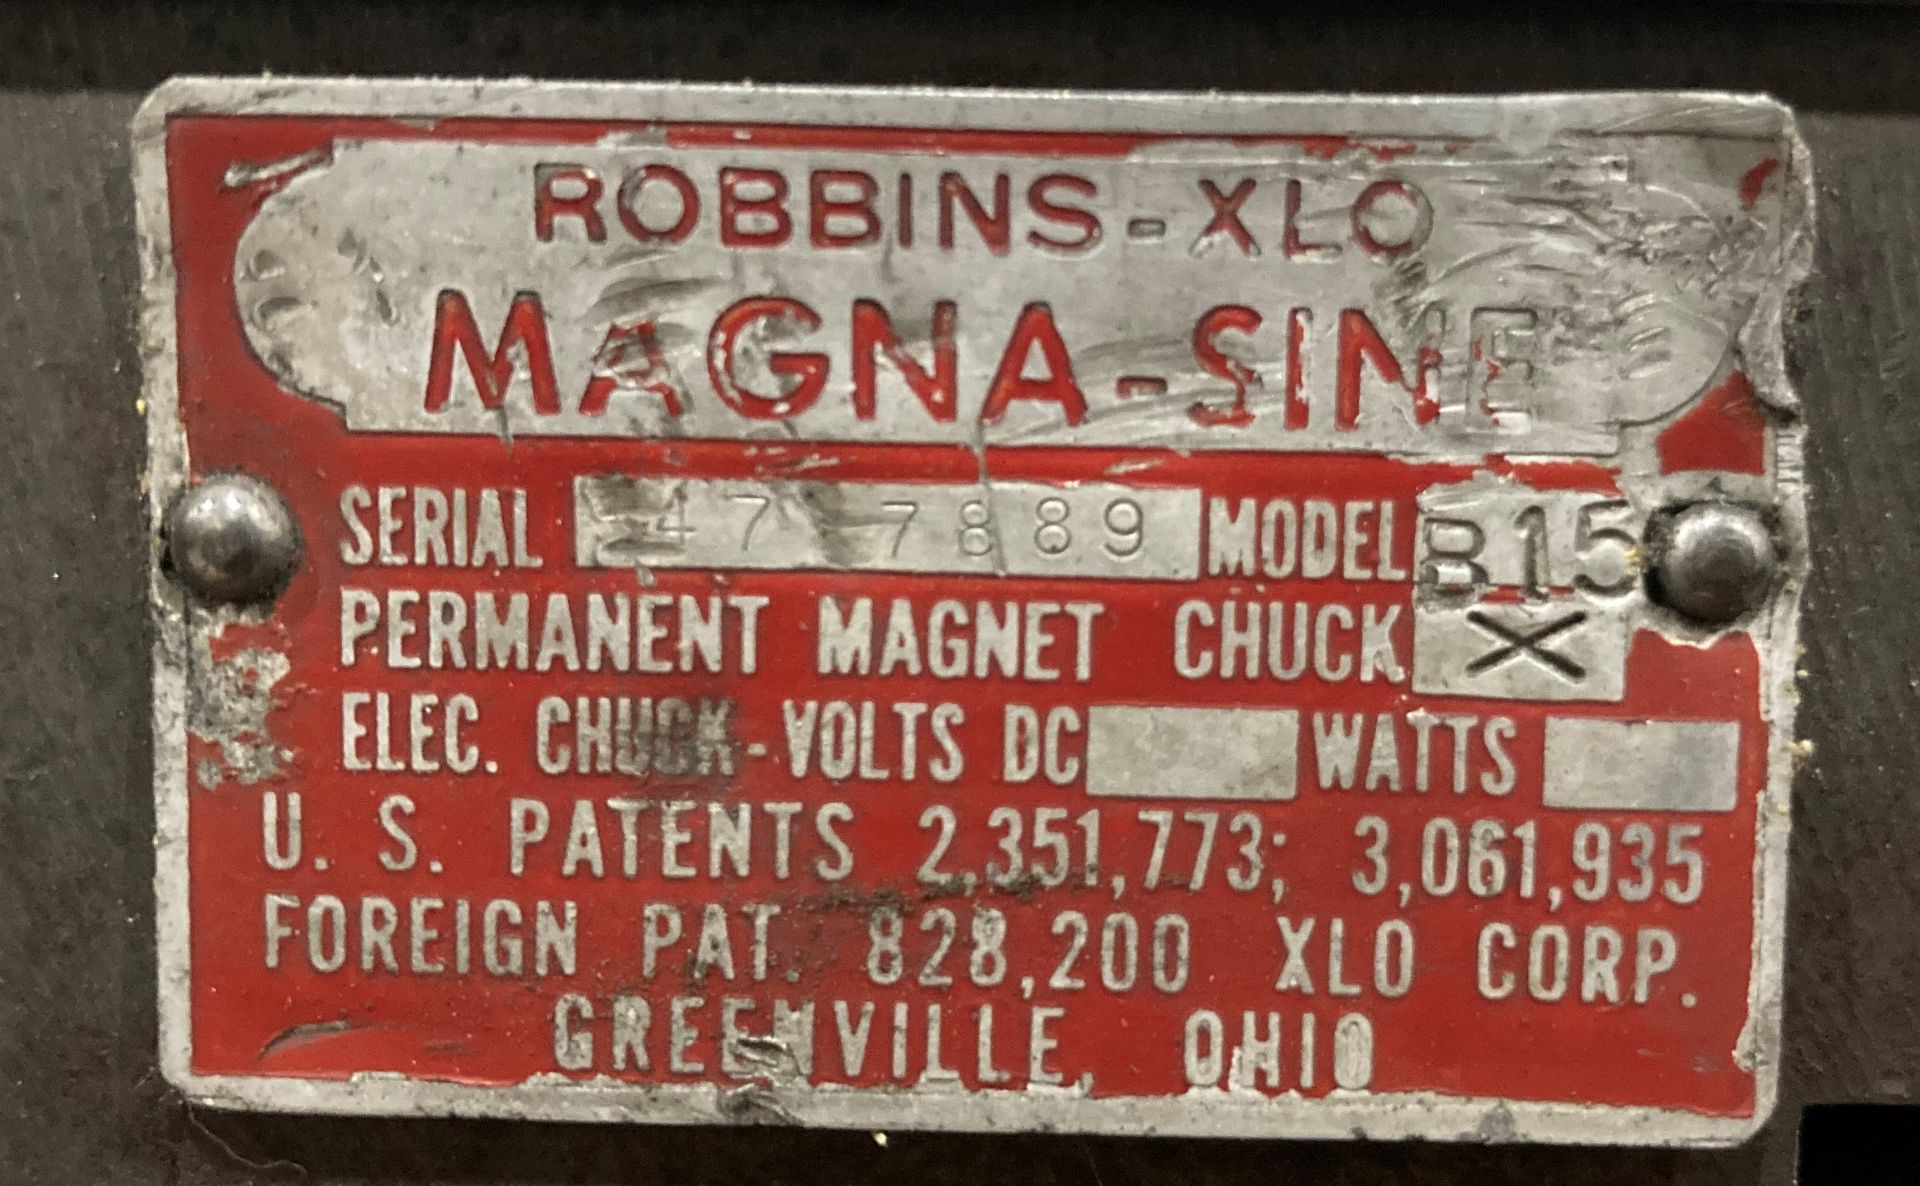 6" x 18" Robbins-XLO Magna-Sine Plate - Image 5 of 5